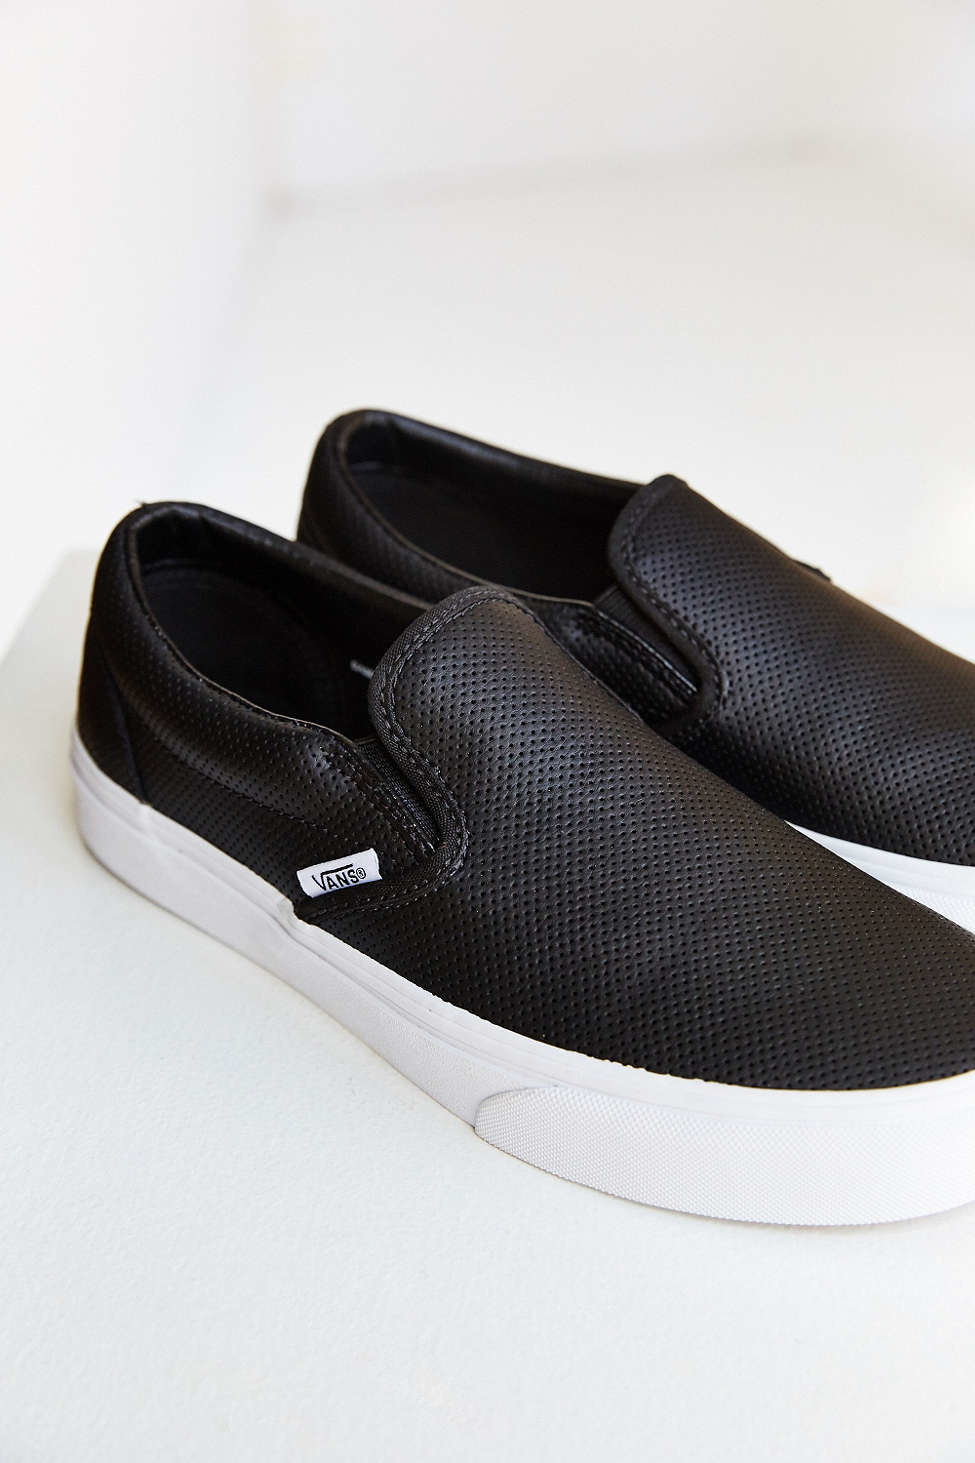 Lyst - Vans Perforated Leather Slip-on Sneaker in Black